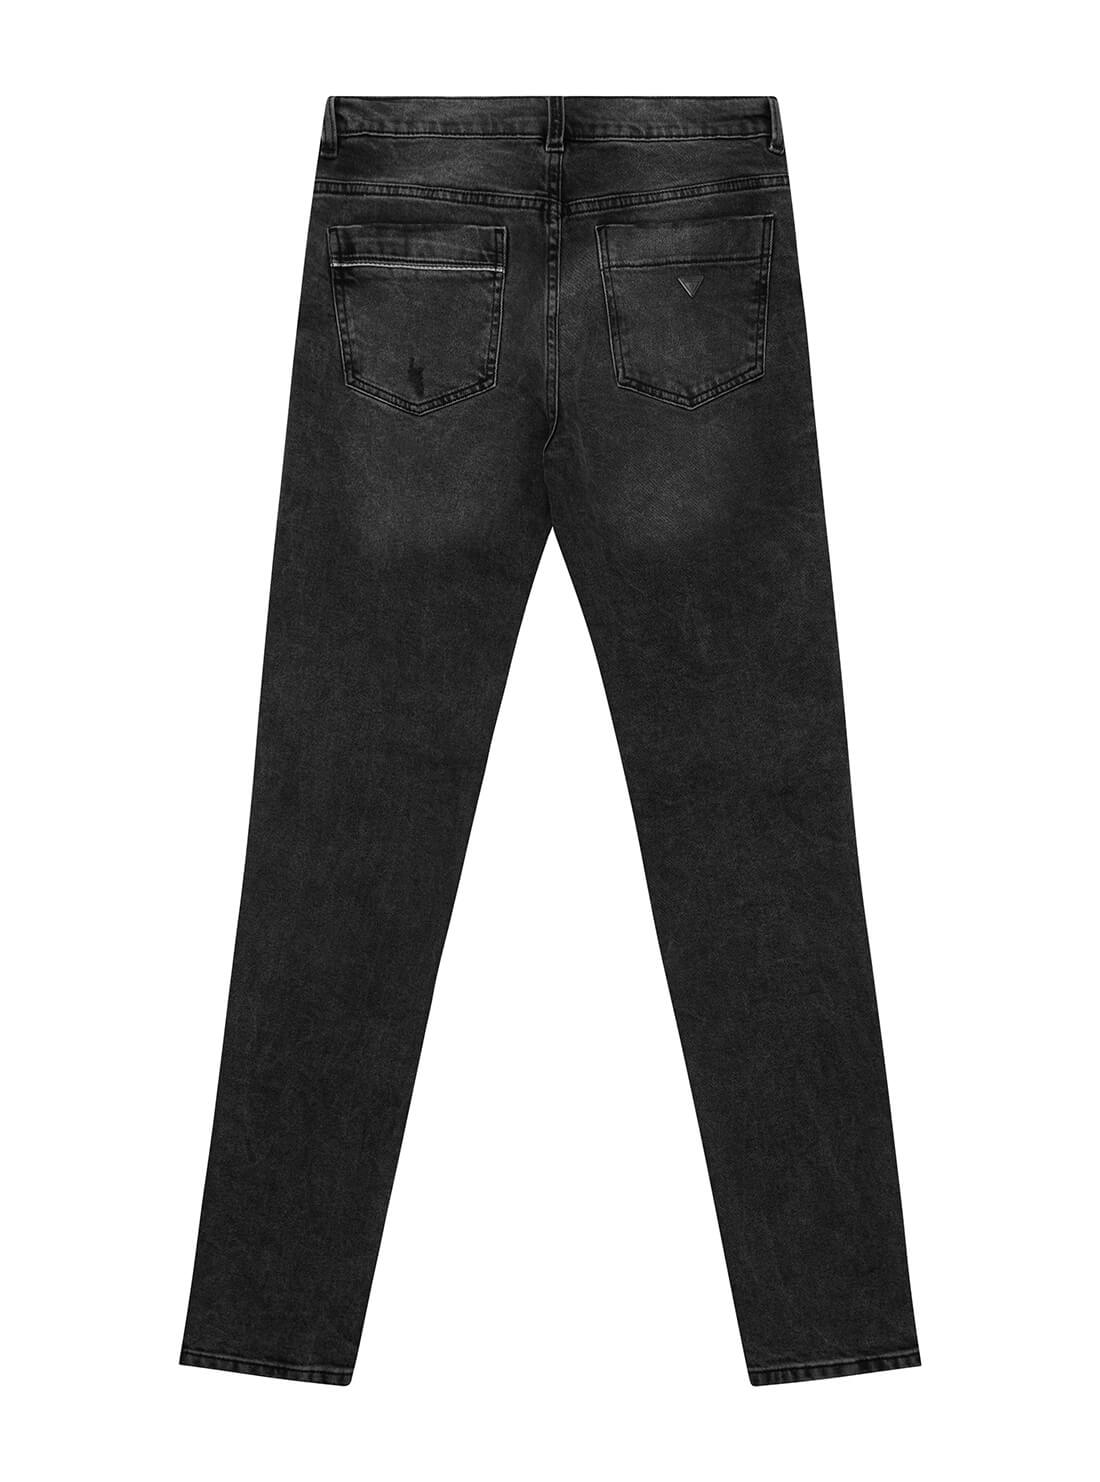 GUESS Big Boy Mid-Rise Denim Skinny Jeans in Vintage Black Wash (7-16) L1YA08D4EK0 Back View